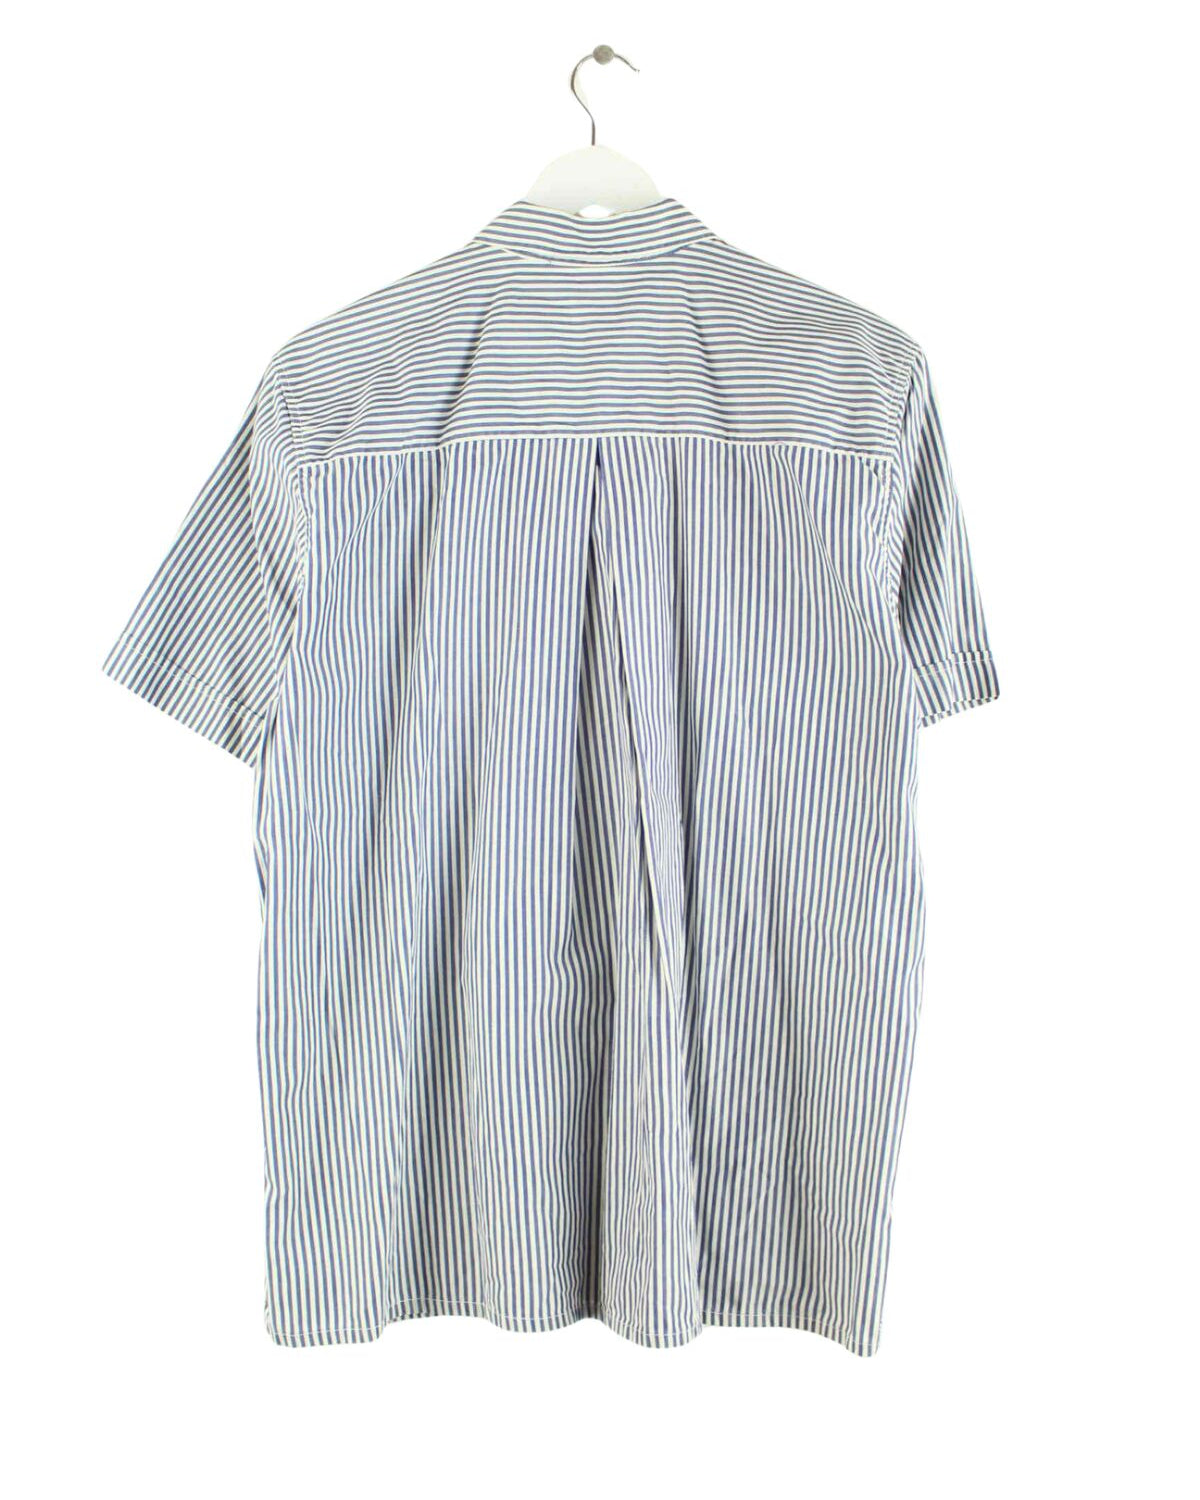 Vintage Damen 90s Striped Kurzarm Hemd Blau L (back image)